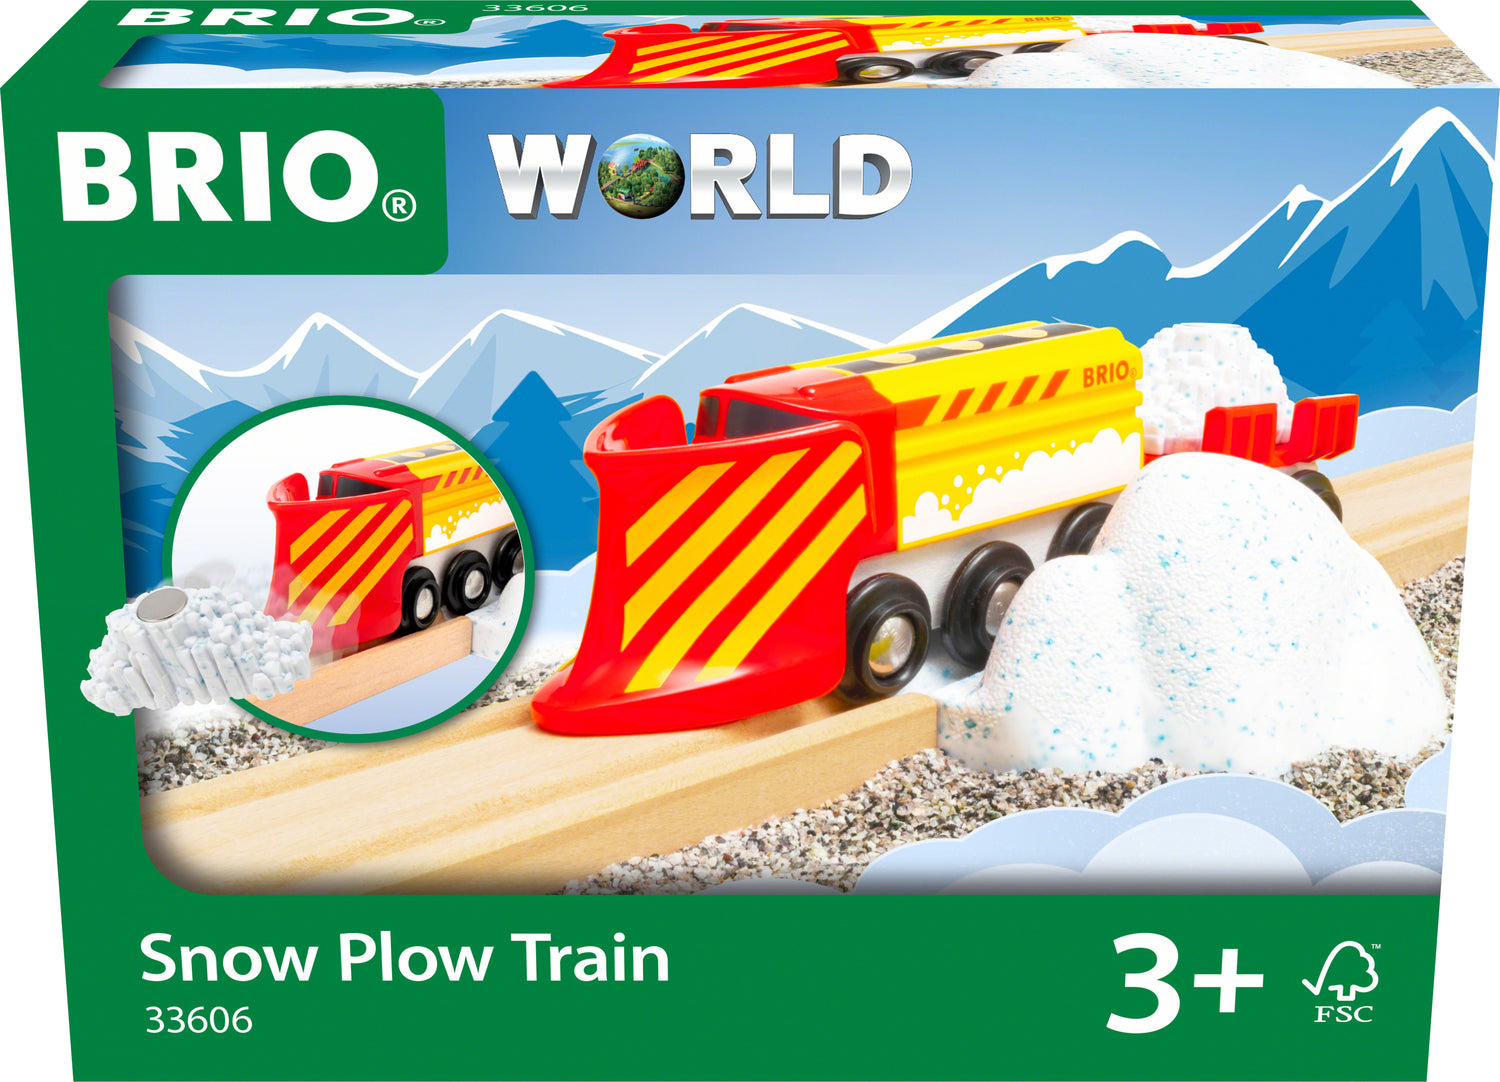 BRIO Snow Plow Train